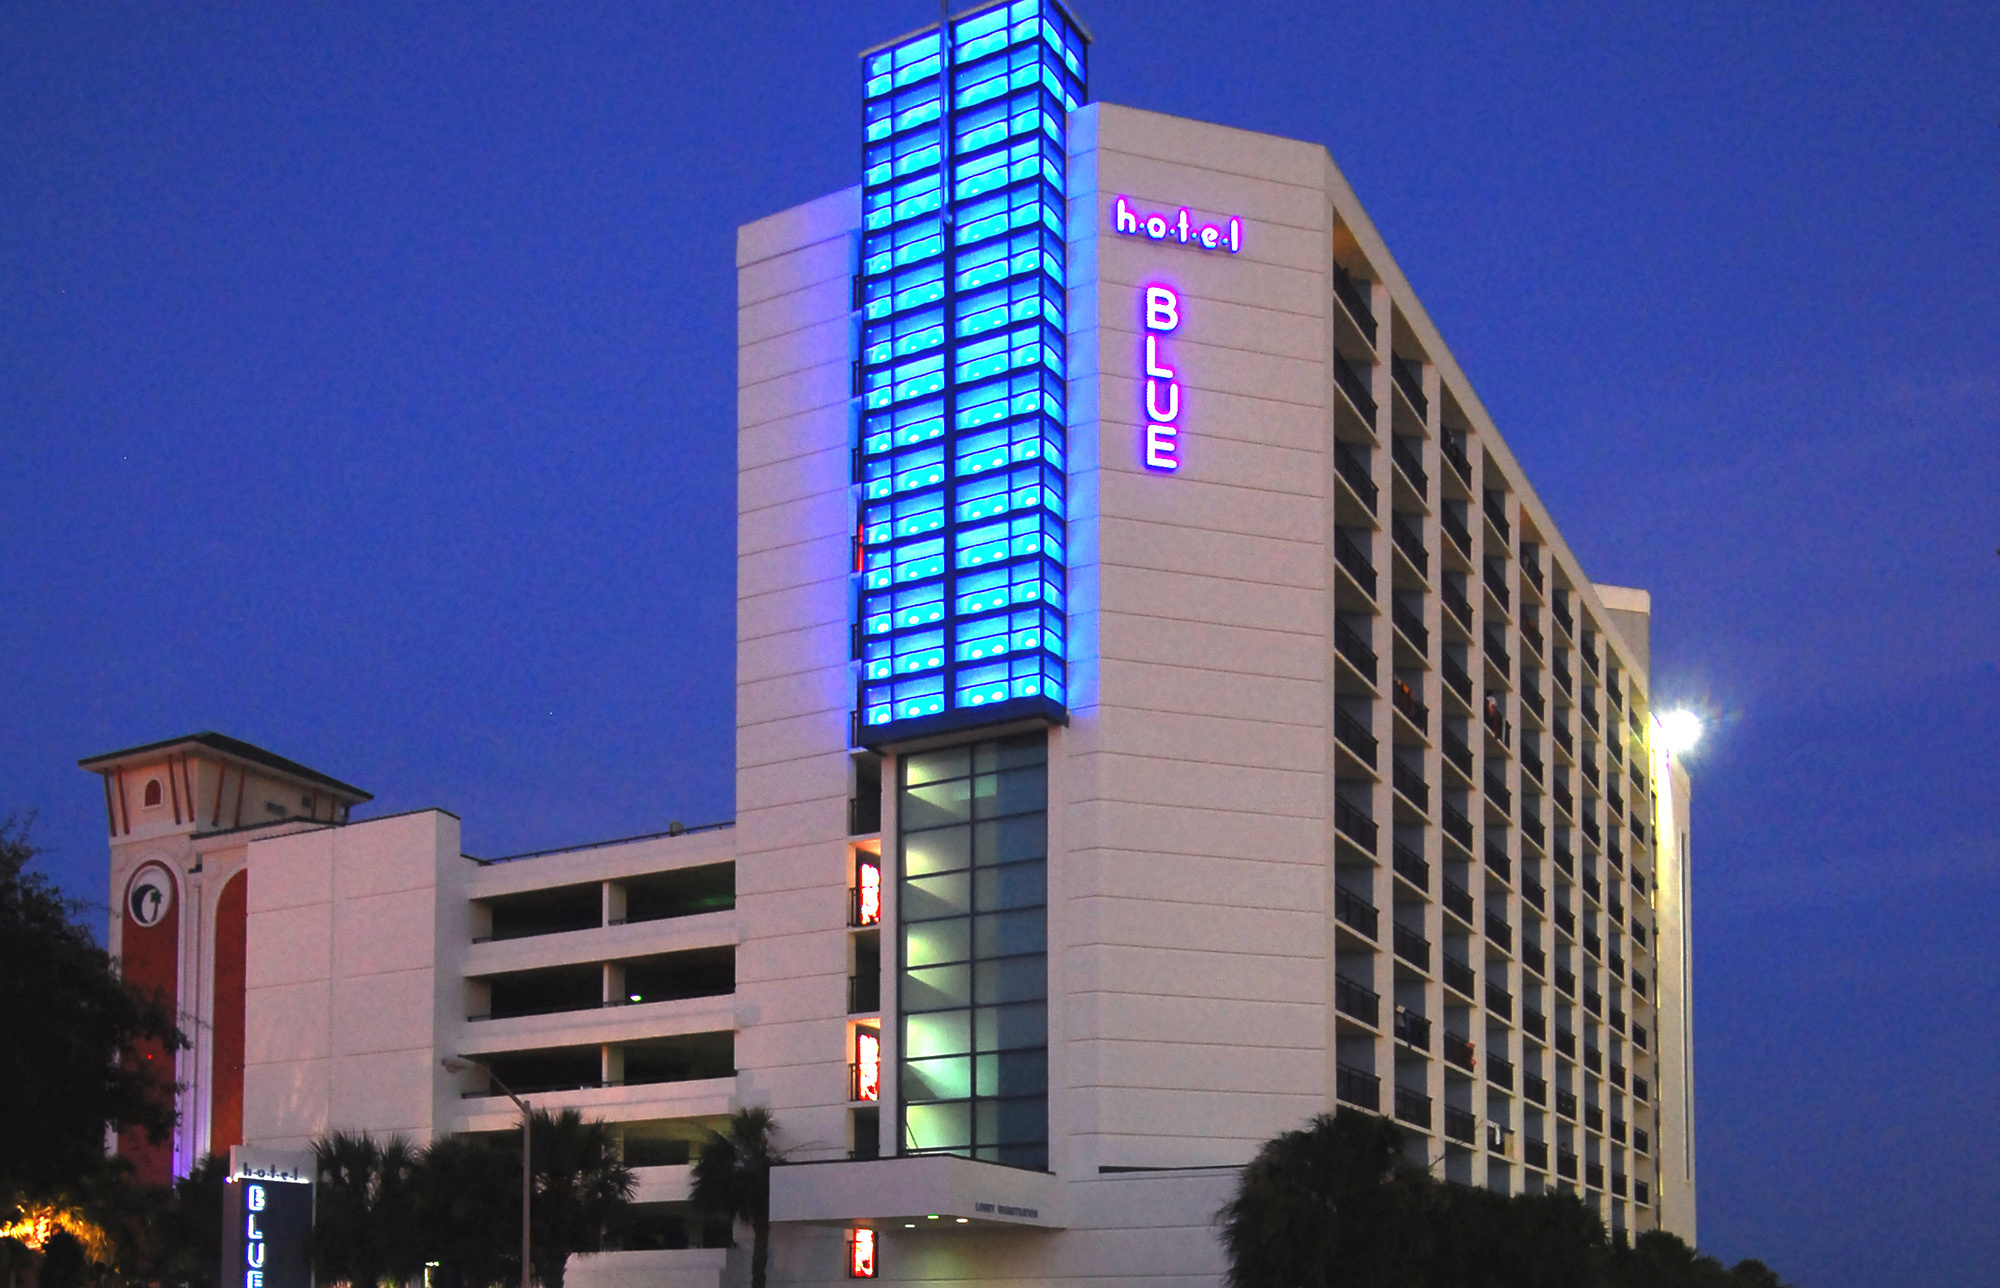 Photo of hotel BLUE, Myrtle Beach, SC